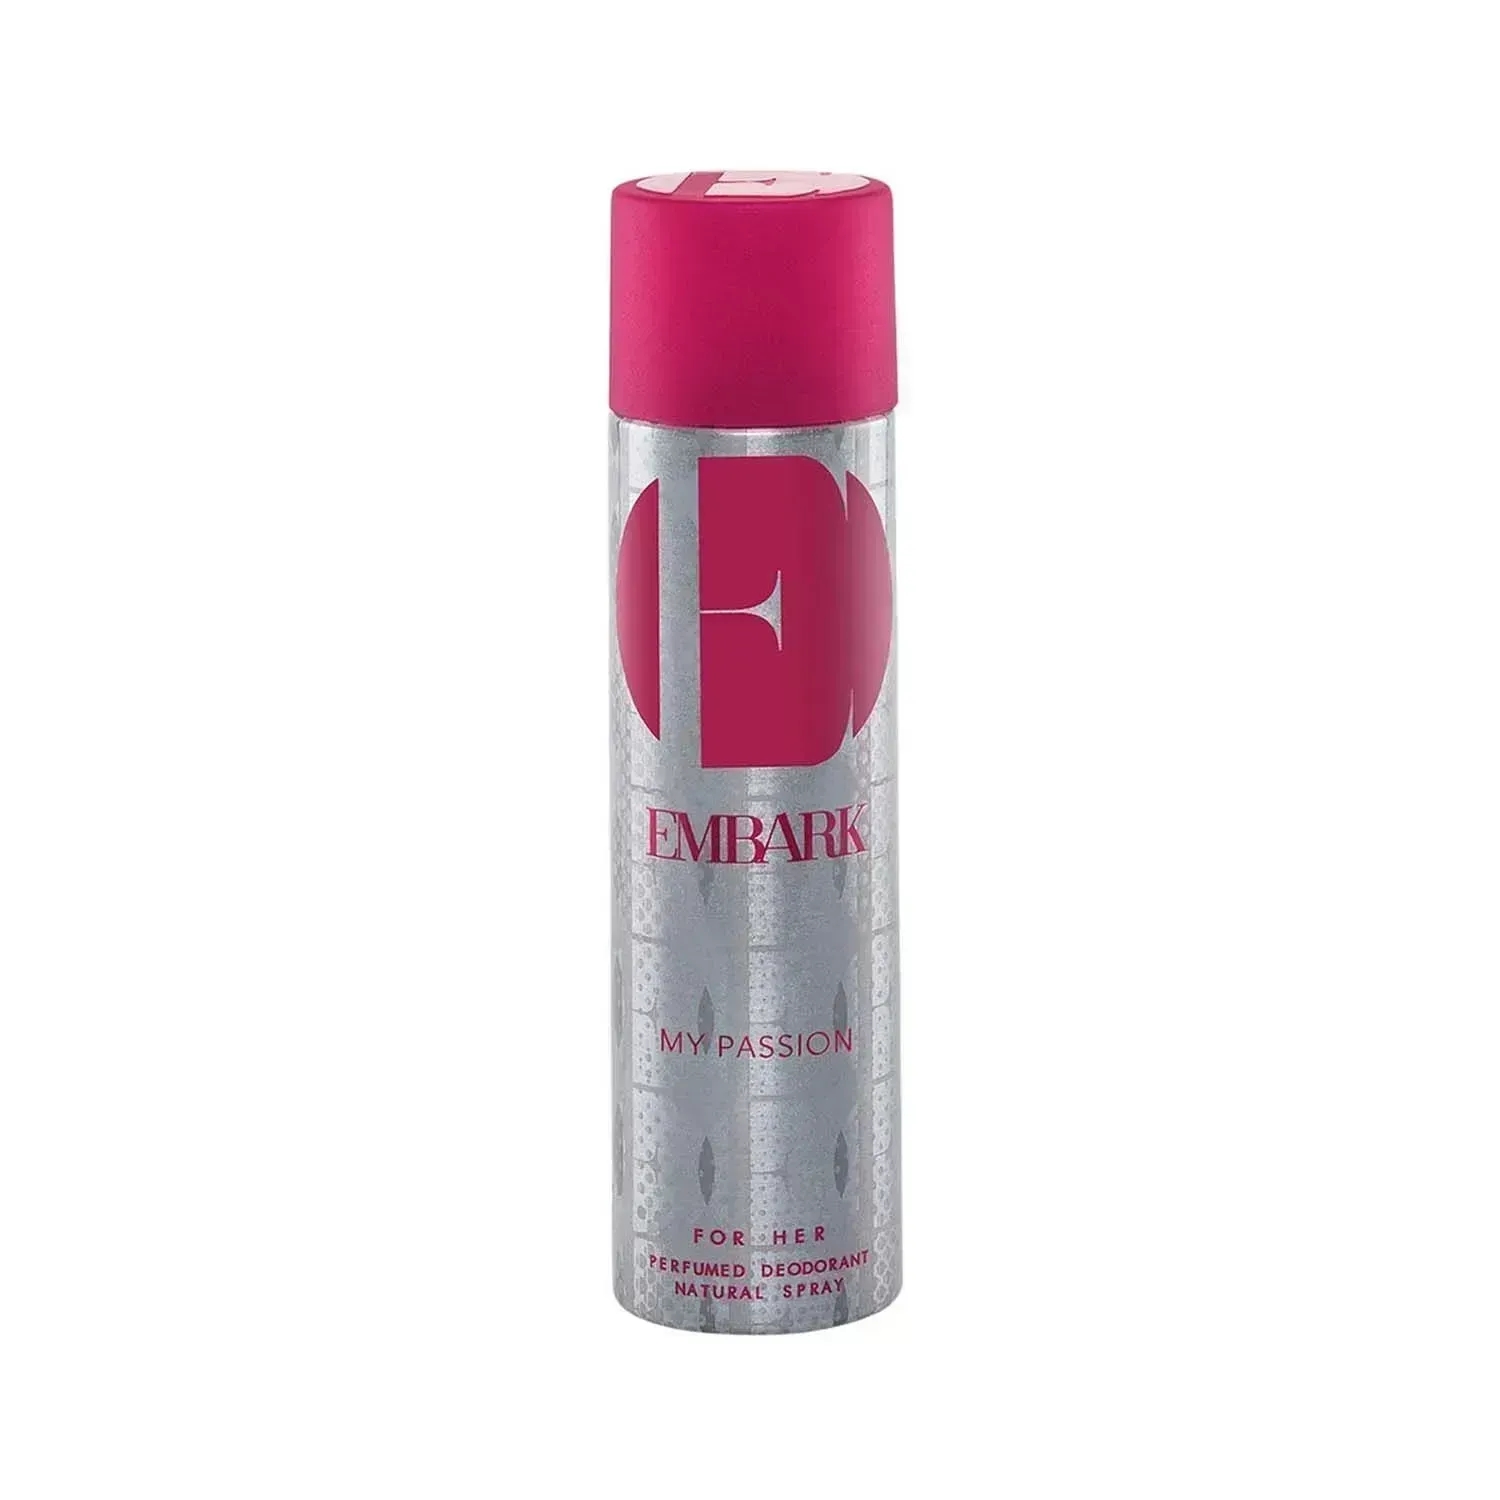 EMBARK | Embark My Passion For Her - Perfumed Deodorant Natural Spray (150ml)